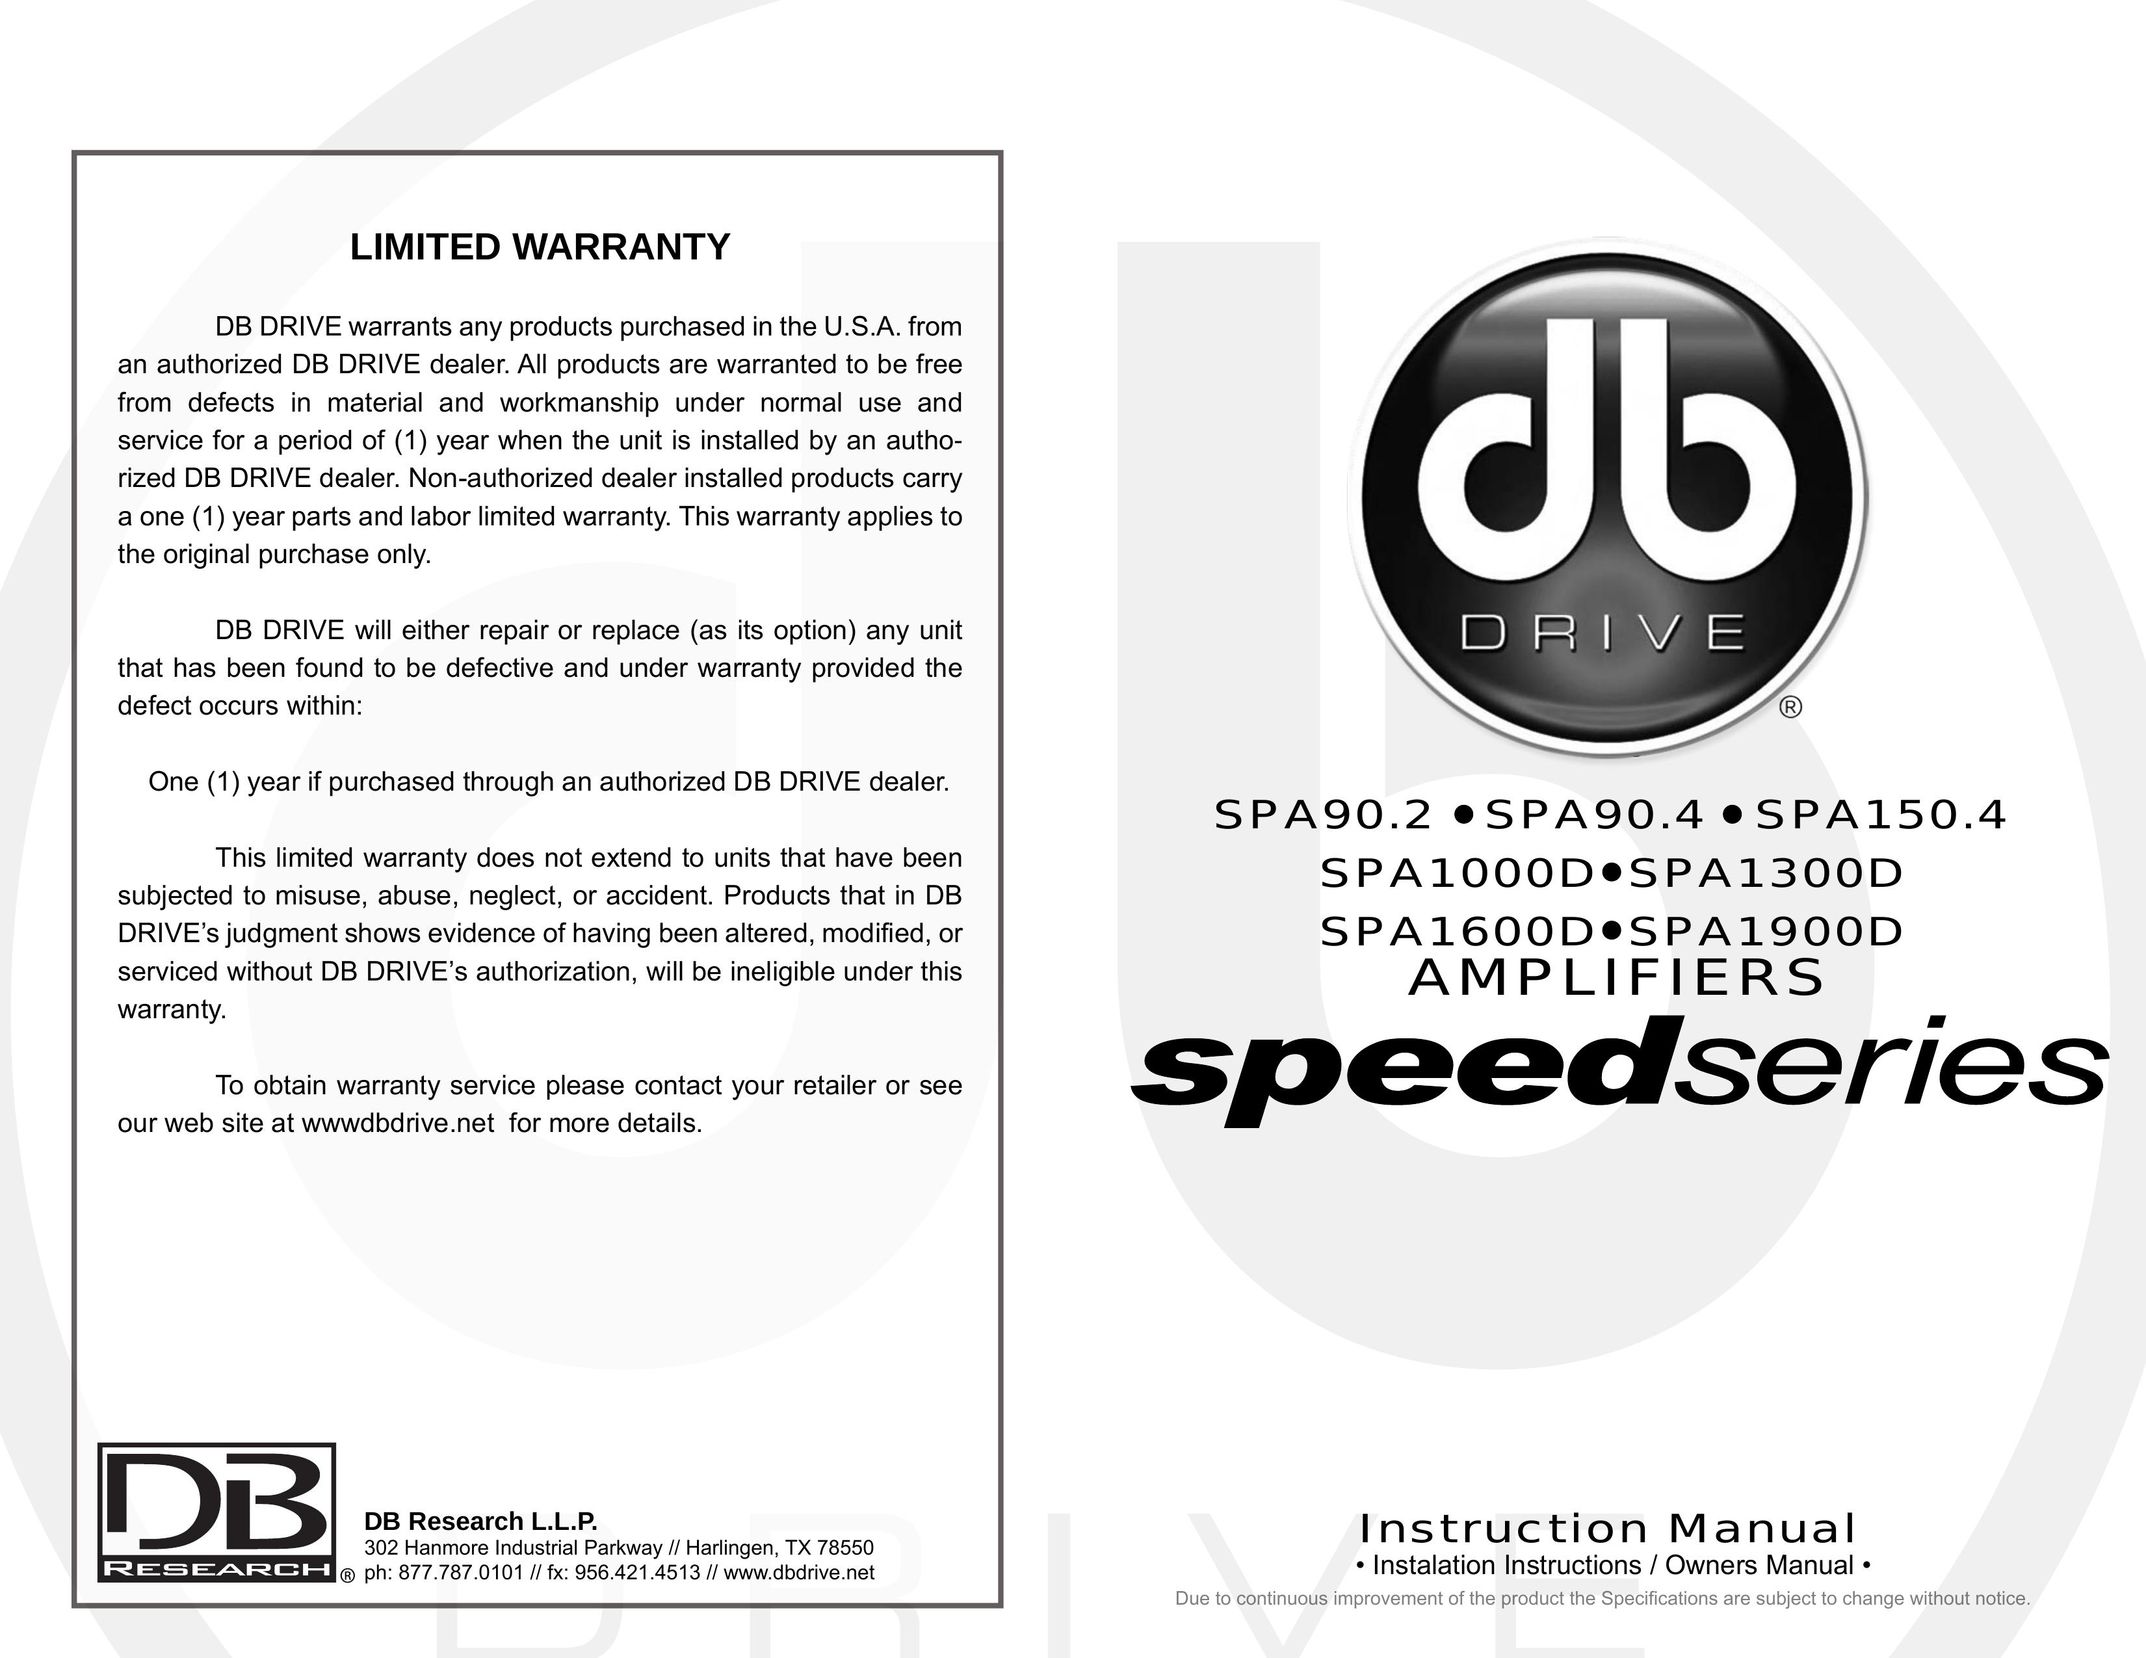 Broan SPA150.4 Car Amplifier User Manual